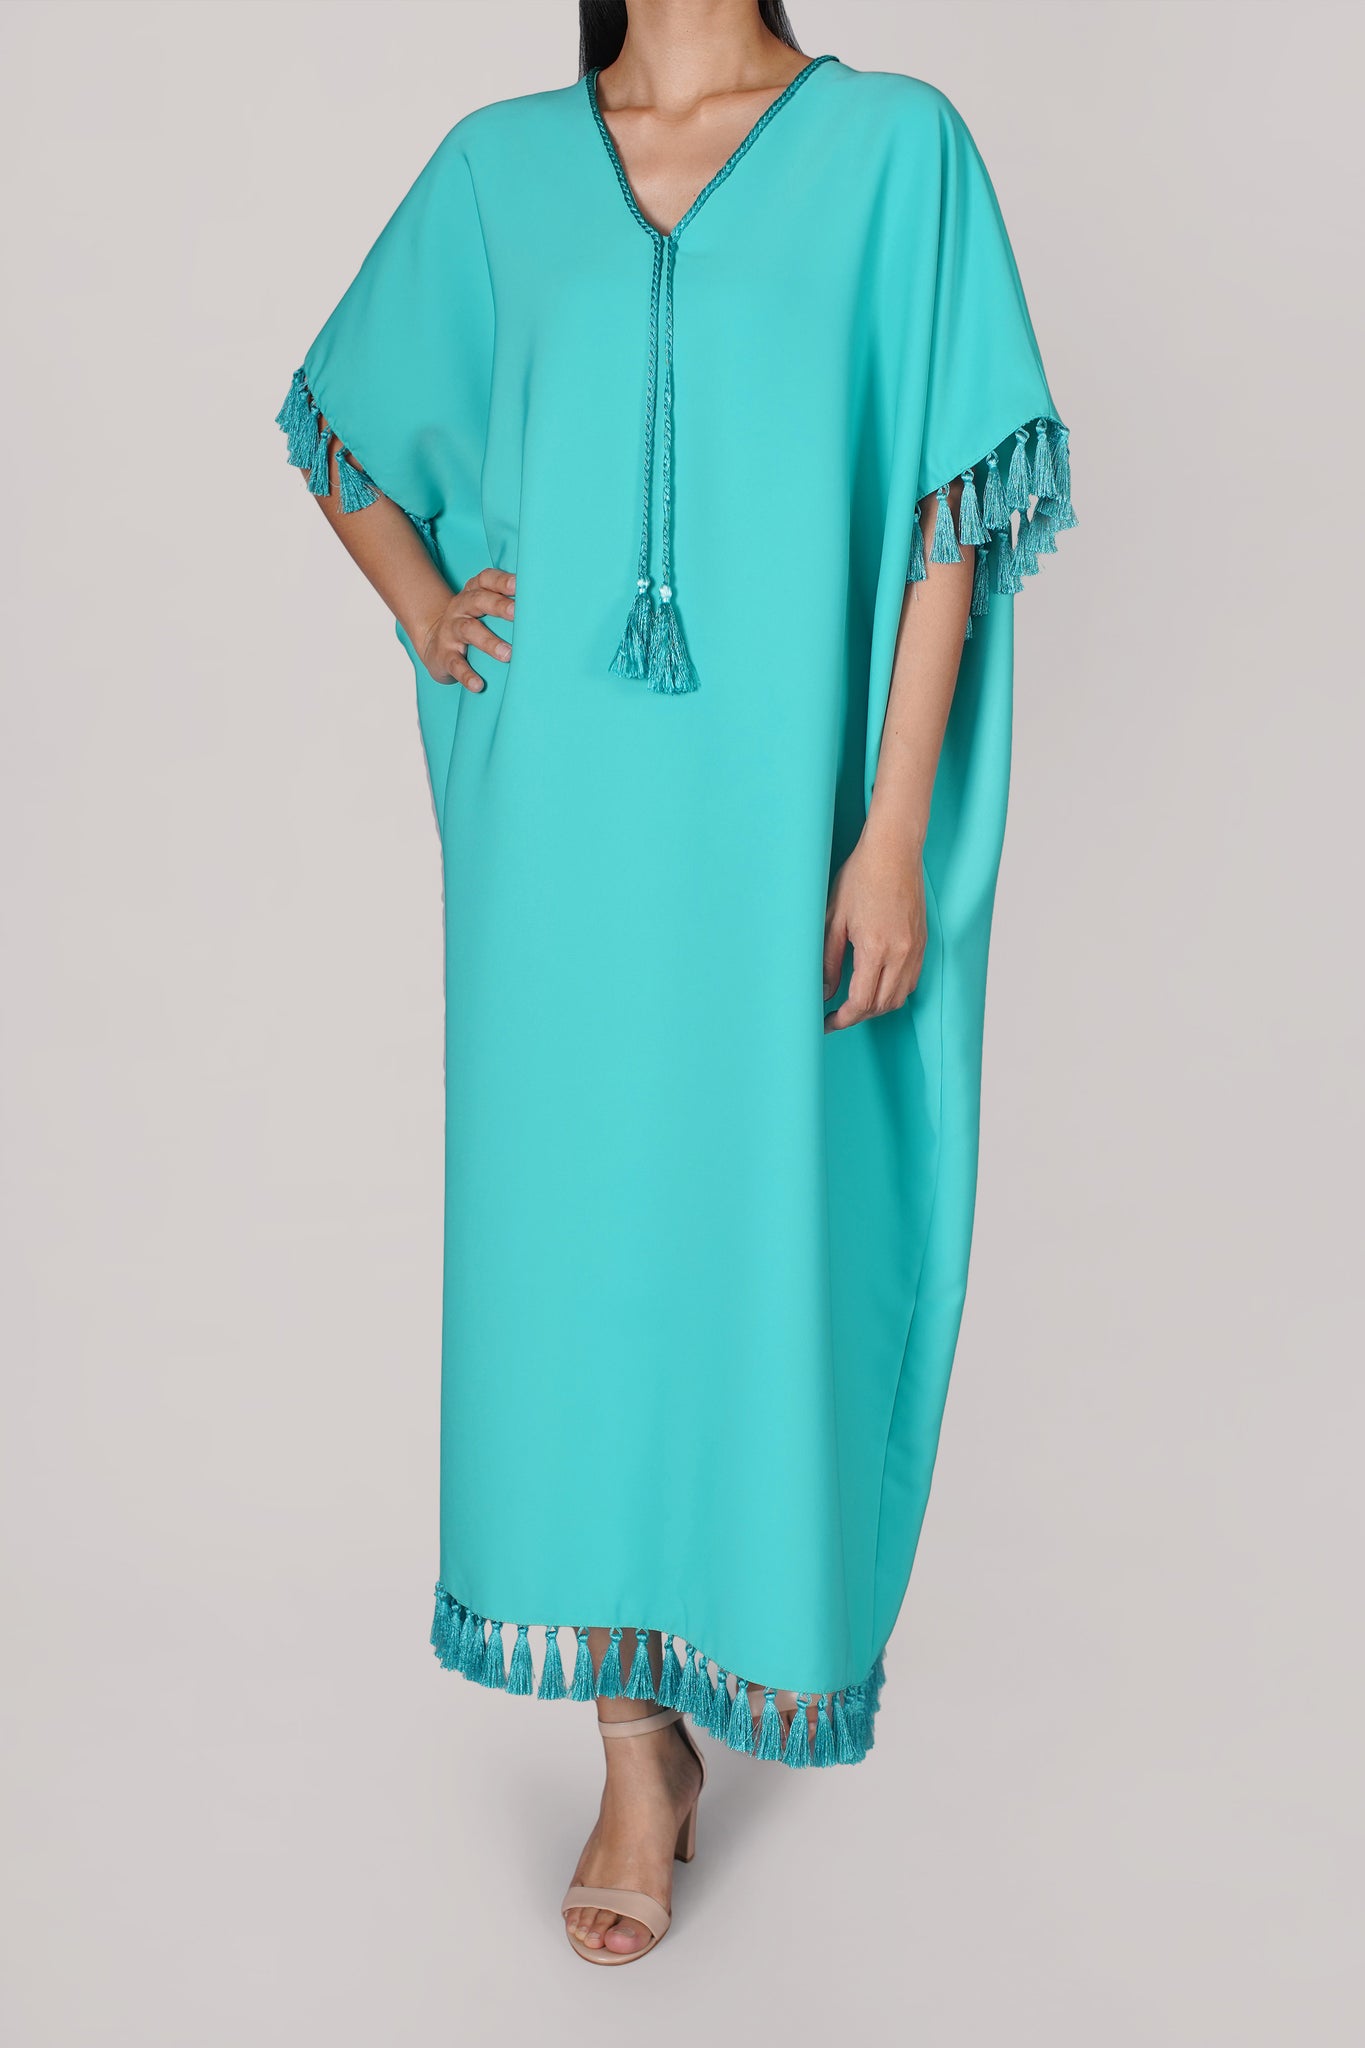 Turquoise Tassel Dress (041)